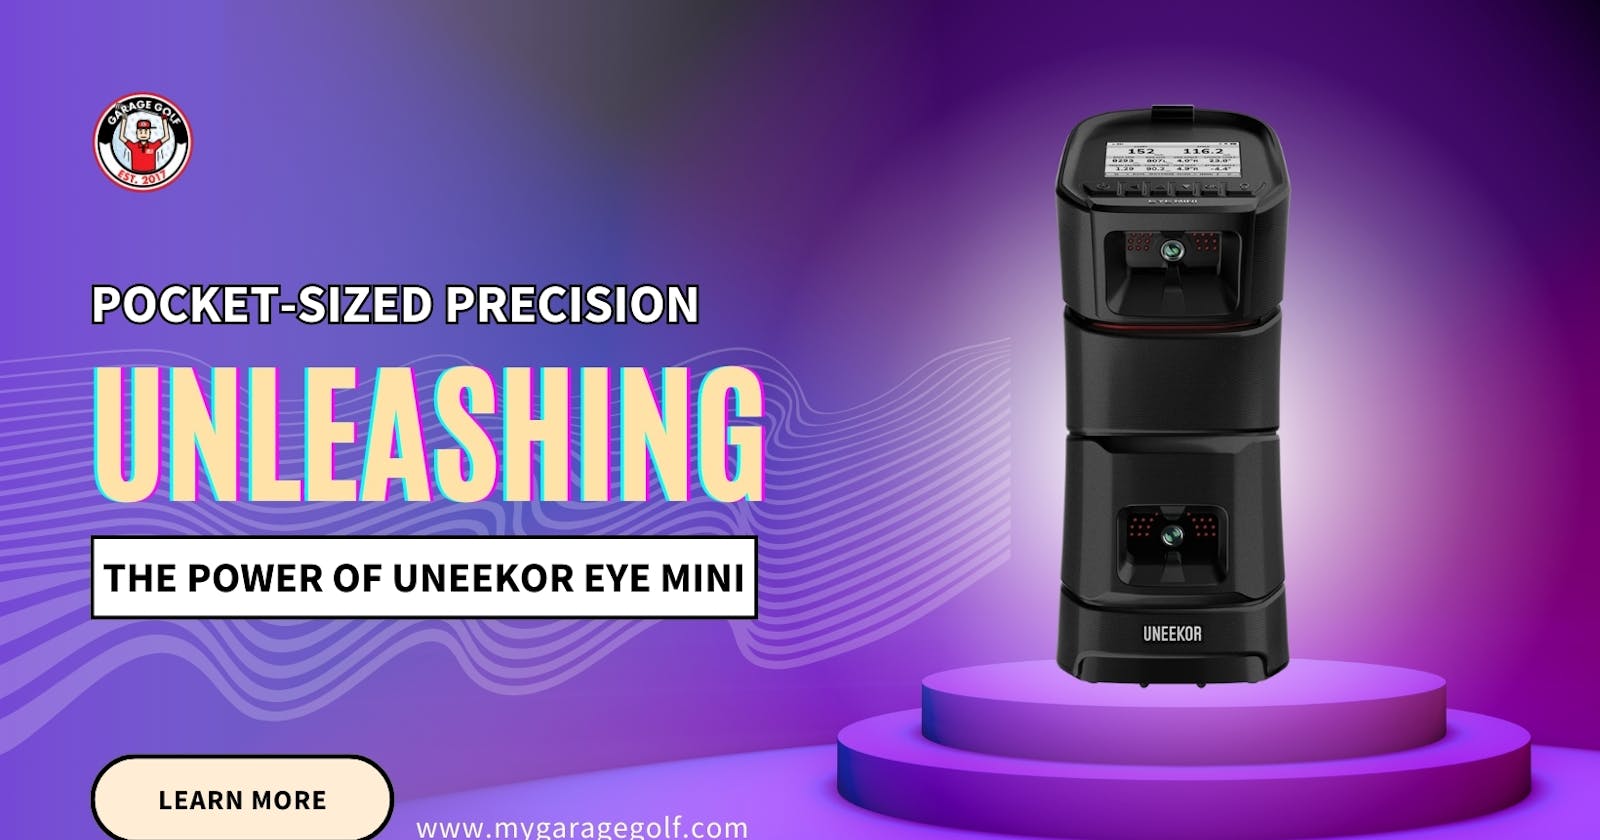 Pocket-Sized Precision: Unleashing the Power of Uneekor Eye Mini